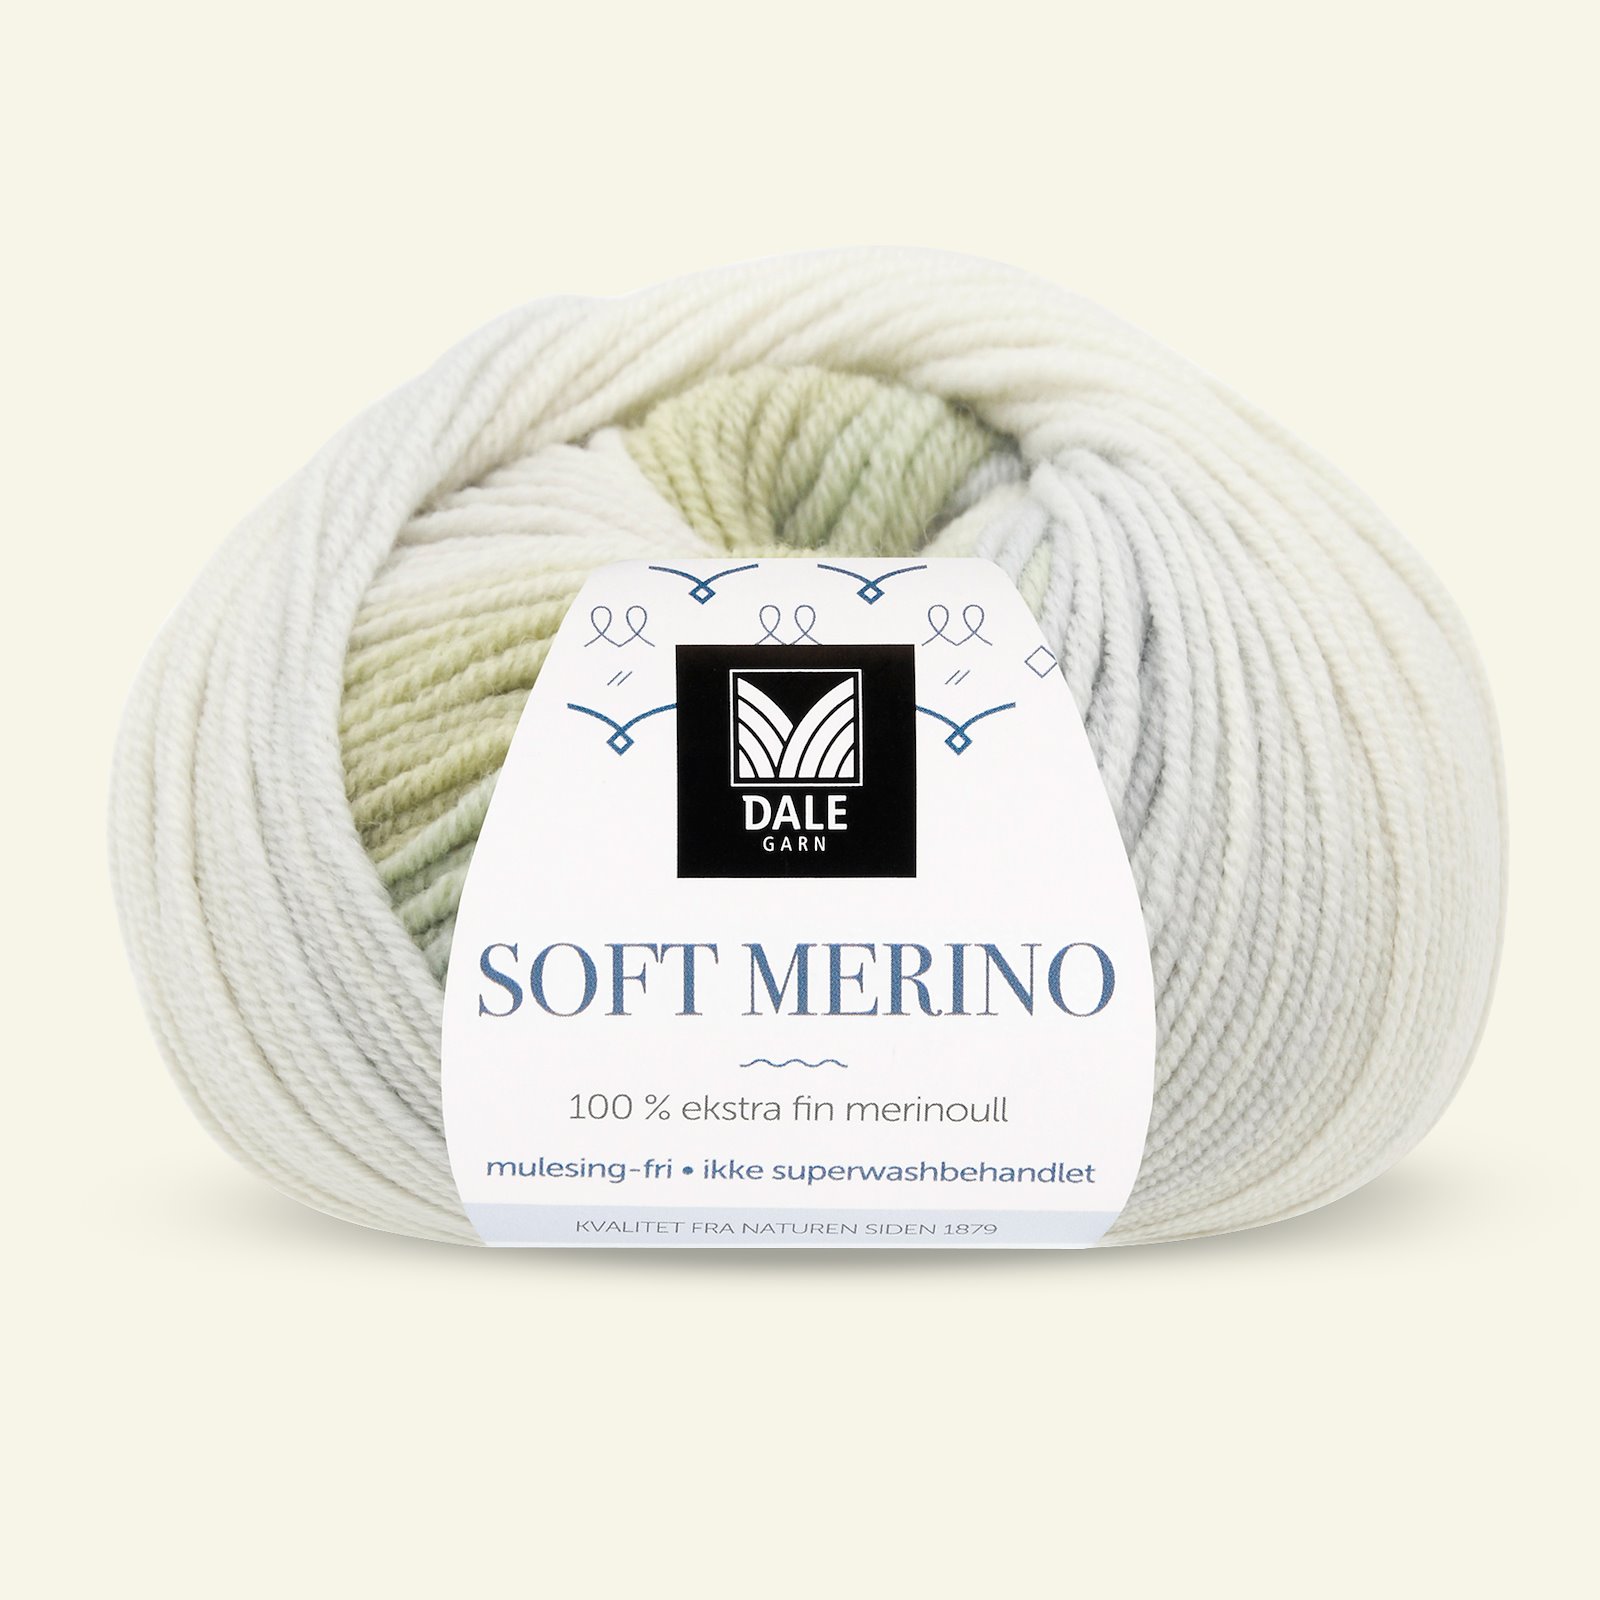 Dale Garn, 100% extra fint merinogarn "Soft Merino", Mint print 90001223_pack